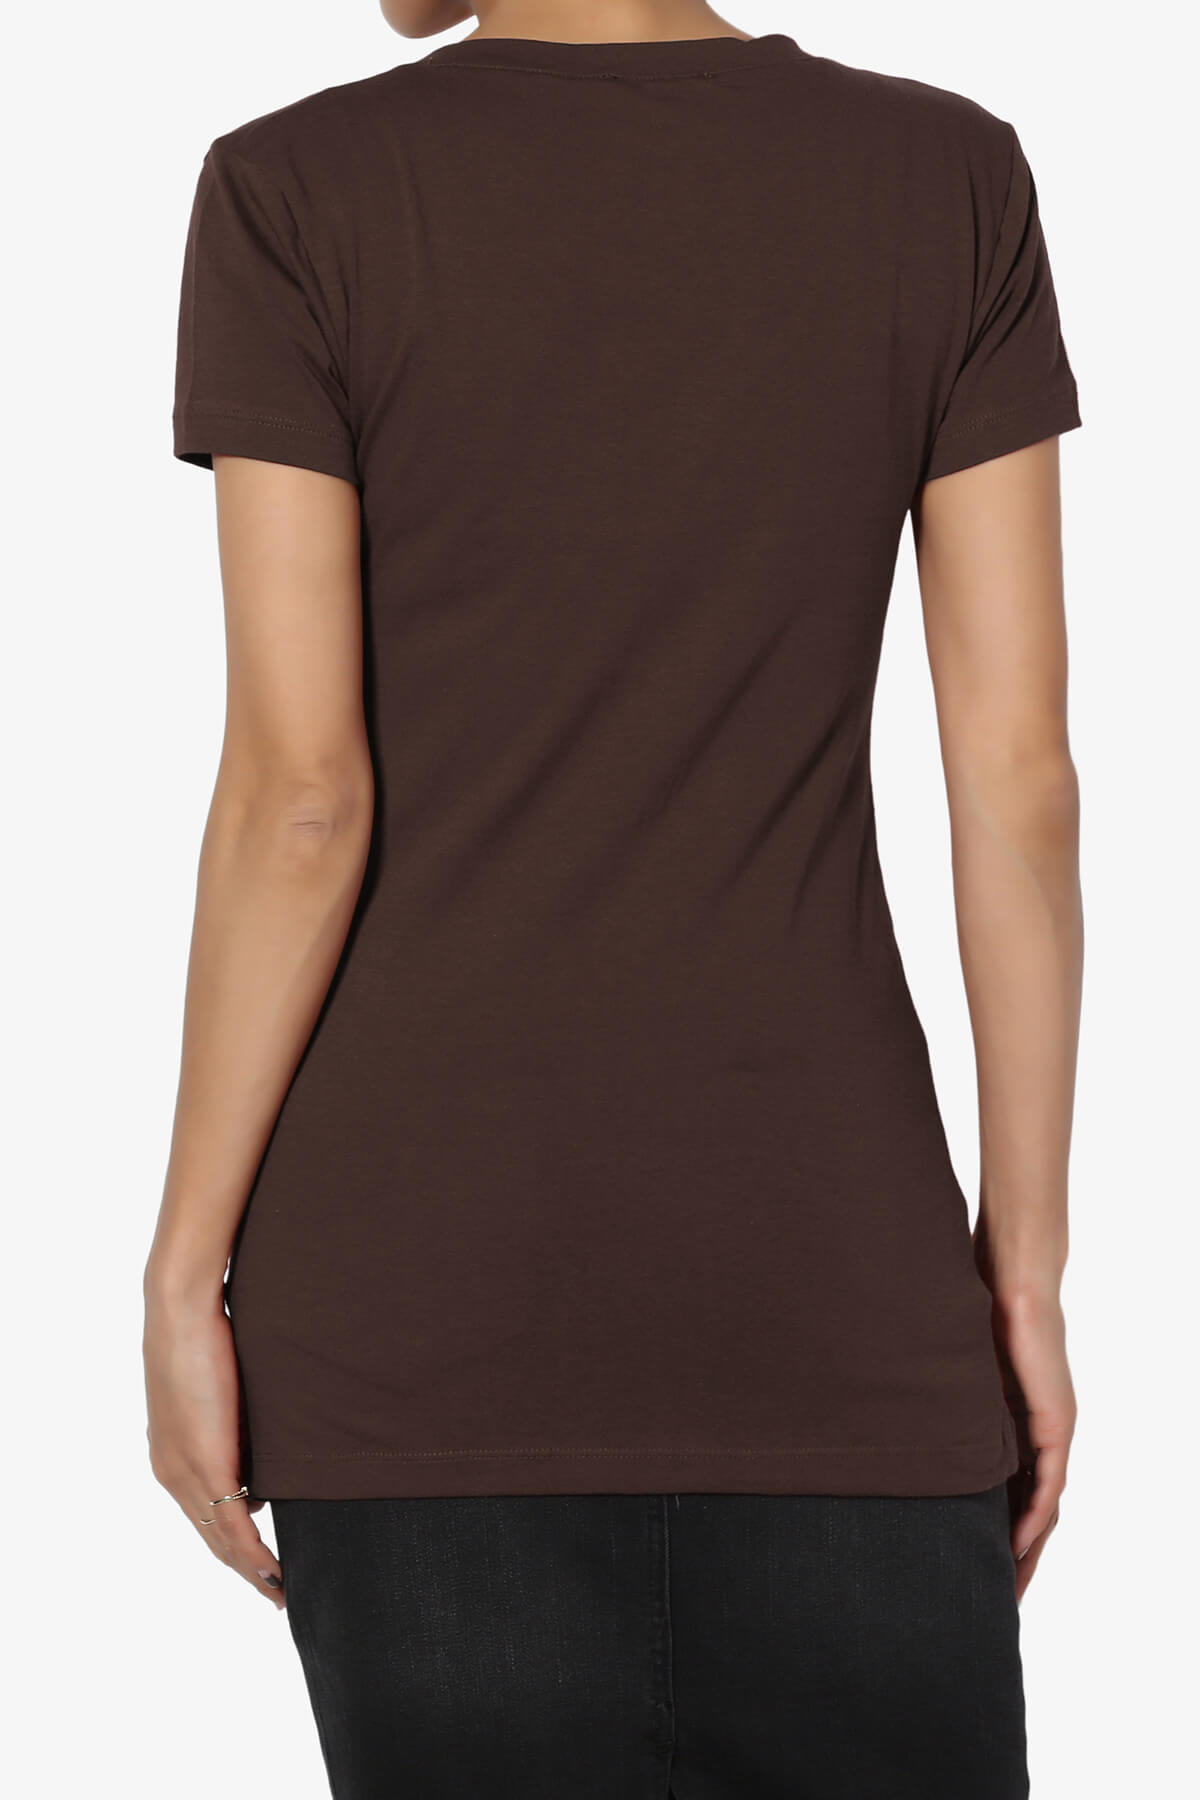 Women's Basic V Neck Short Sleeve T-Shirts Plain Stretch Cotton Spandex Top Tee - image 2 of 6